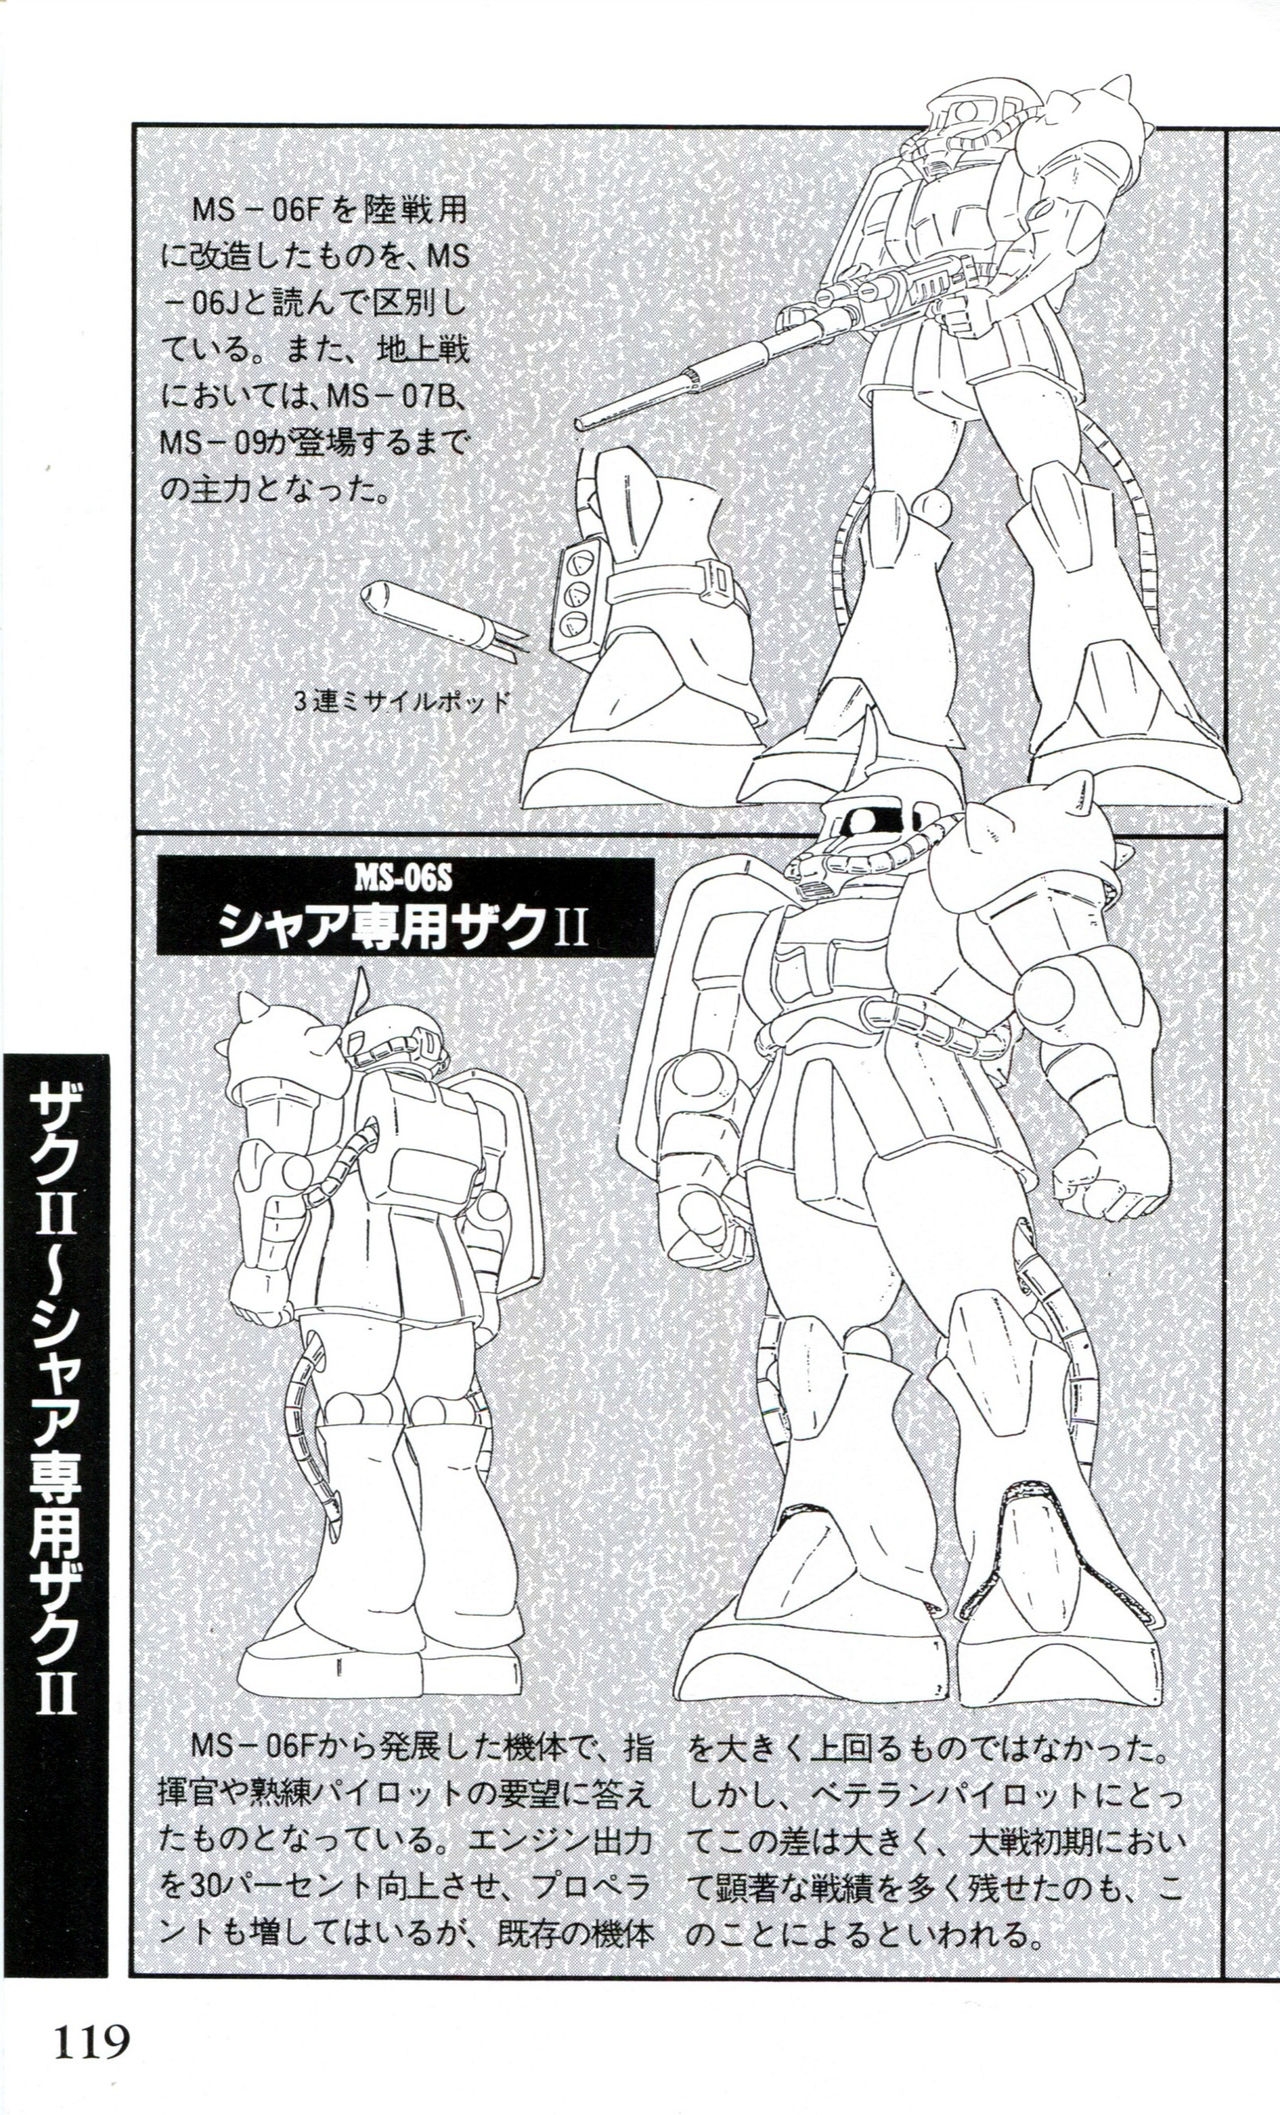 Mobile Suit Gundam U.C. Box MS Gundam Encyclopedia NO.01 - Mobile Suit Gundam 118